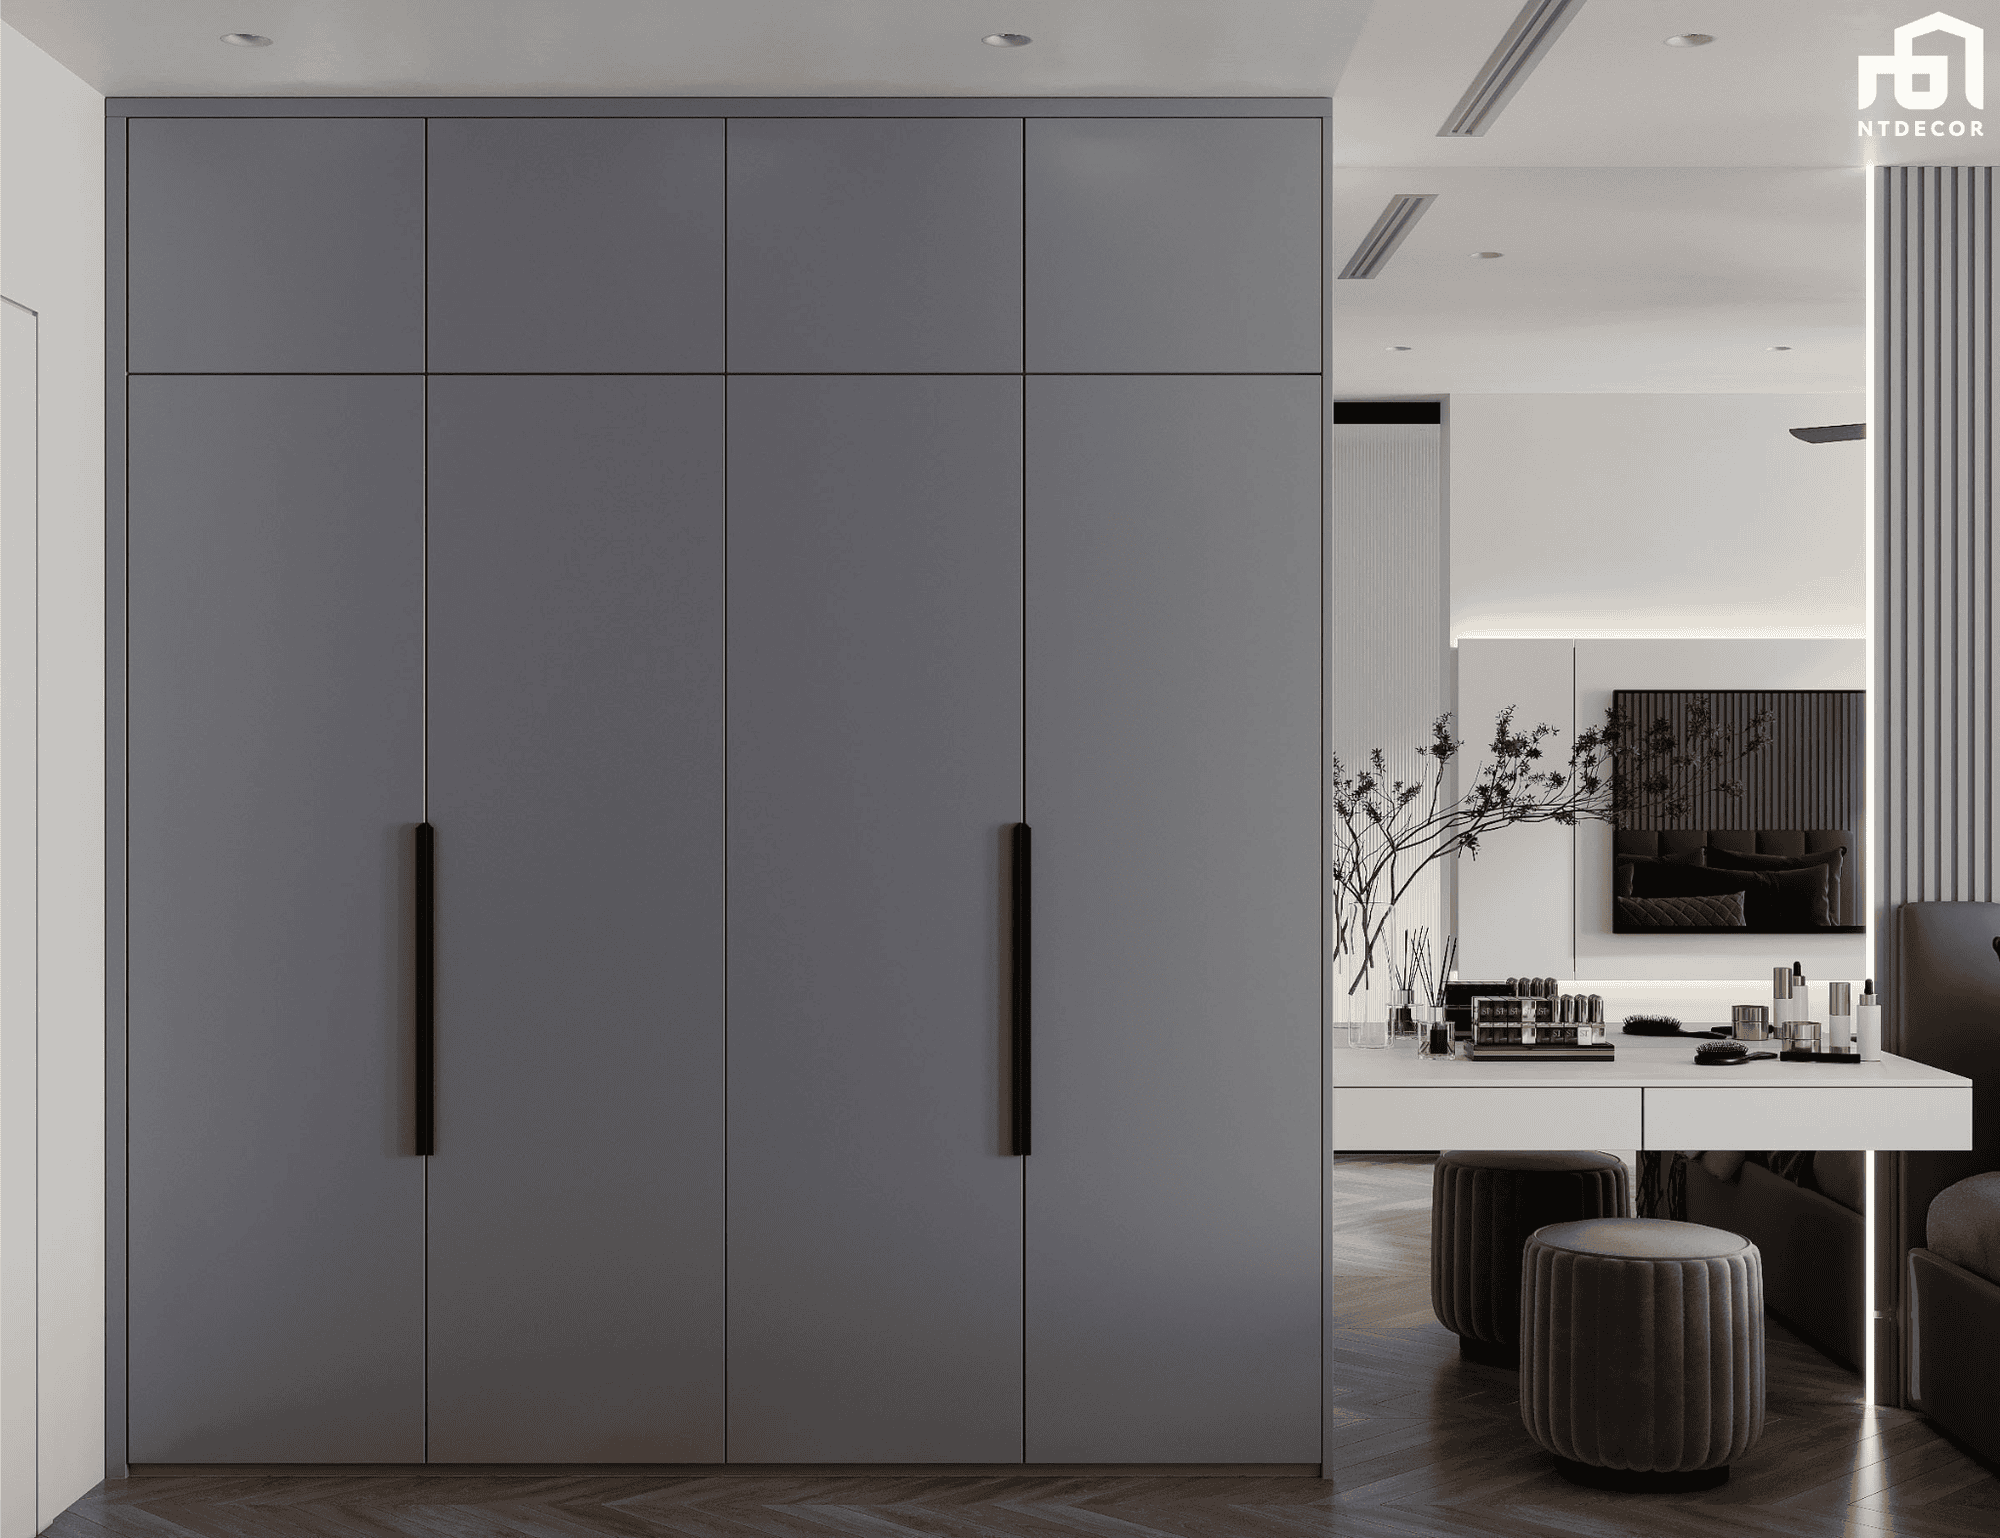 Bedroom 3D Design of Xi Riverview Palace Interior Design Modern Style | NTDecor